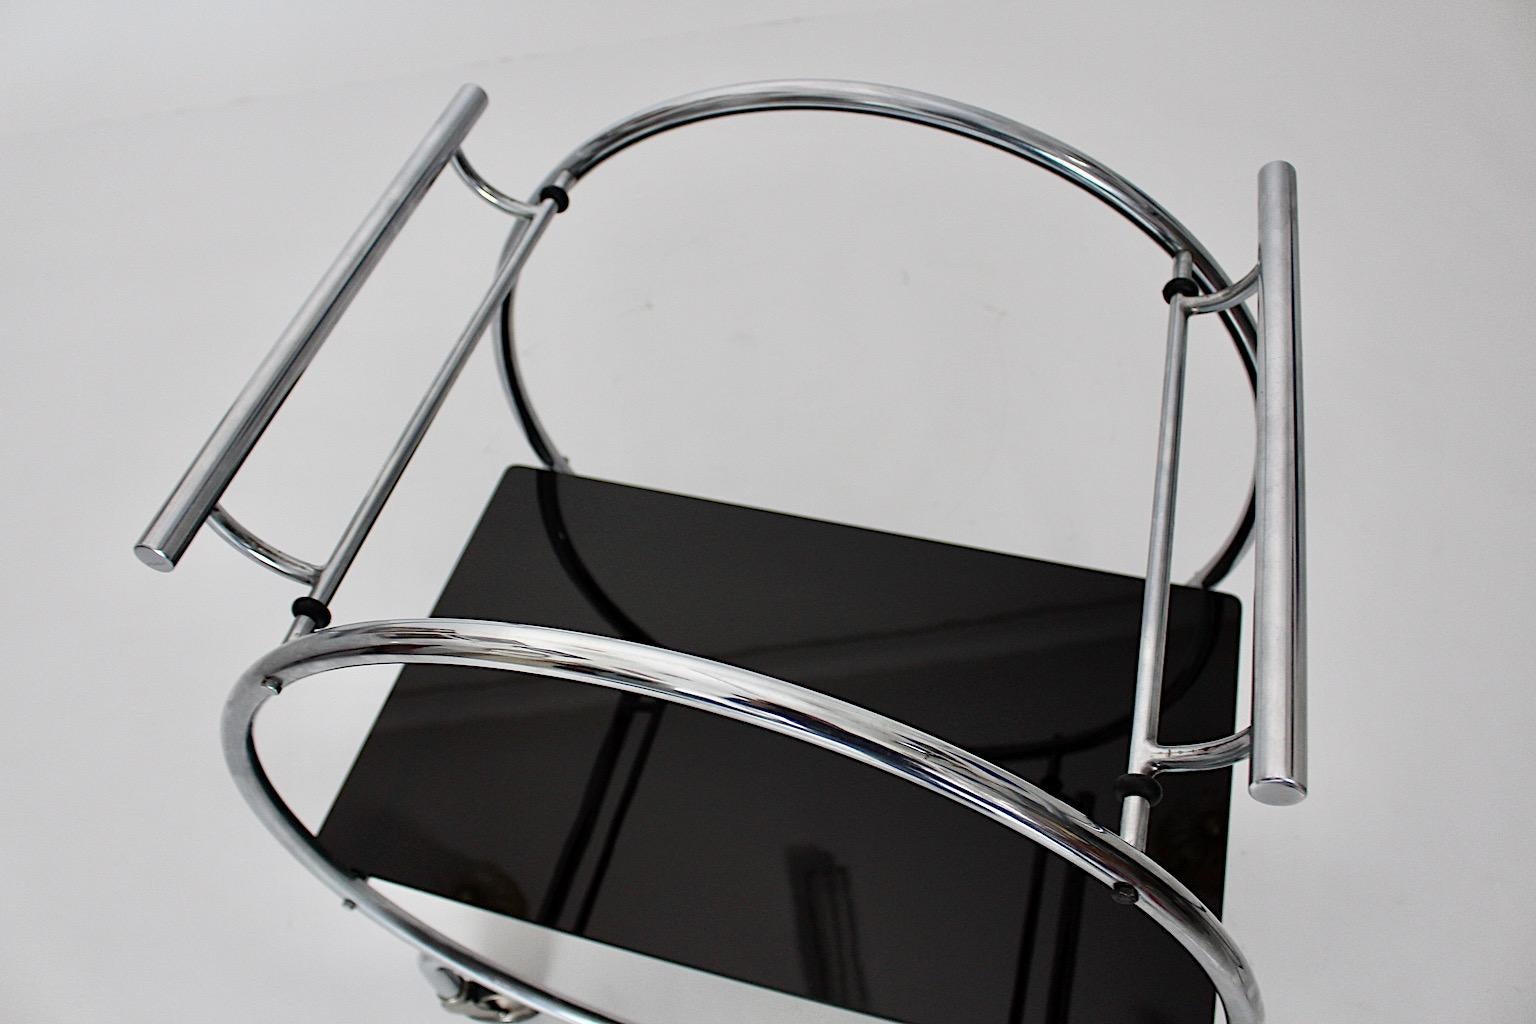 Art Deco Era Vintage Bauhaus Chromed Metal Glass Bar Cart or Cart, 1930s Germany For Sale 5